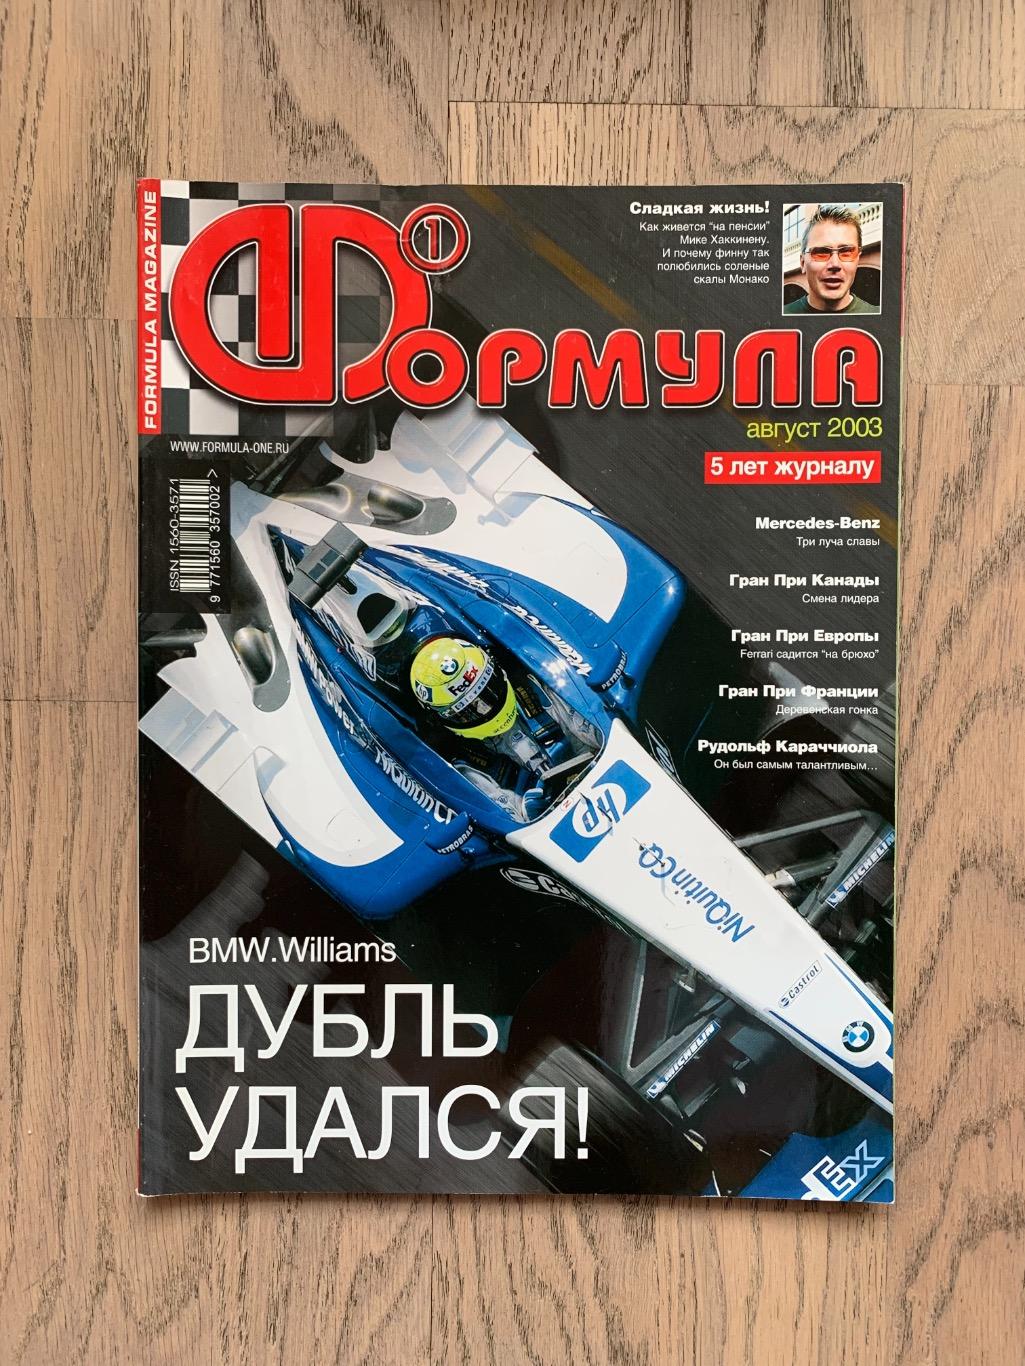 Журнал Формула 1 (Formula Magazine) / август 2003